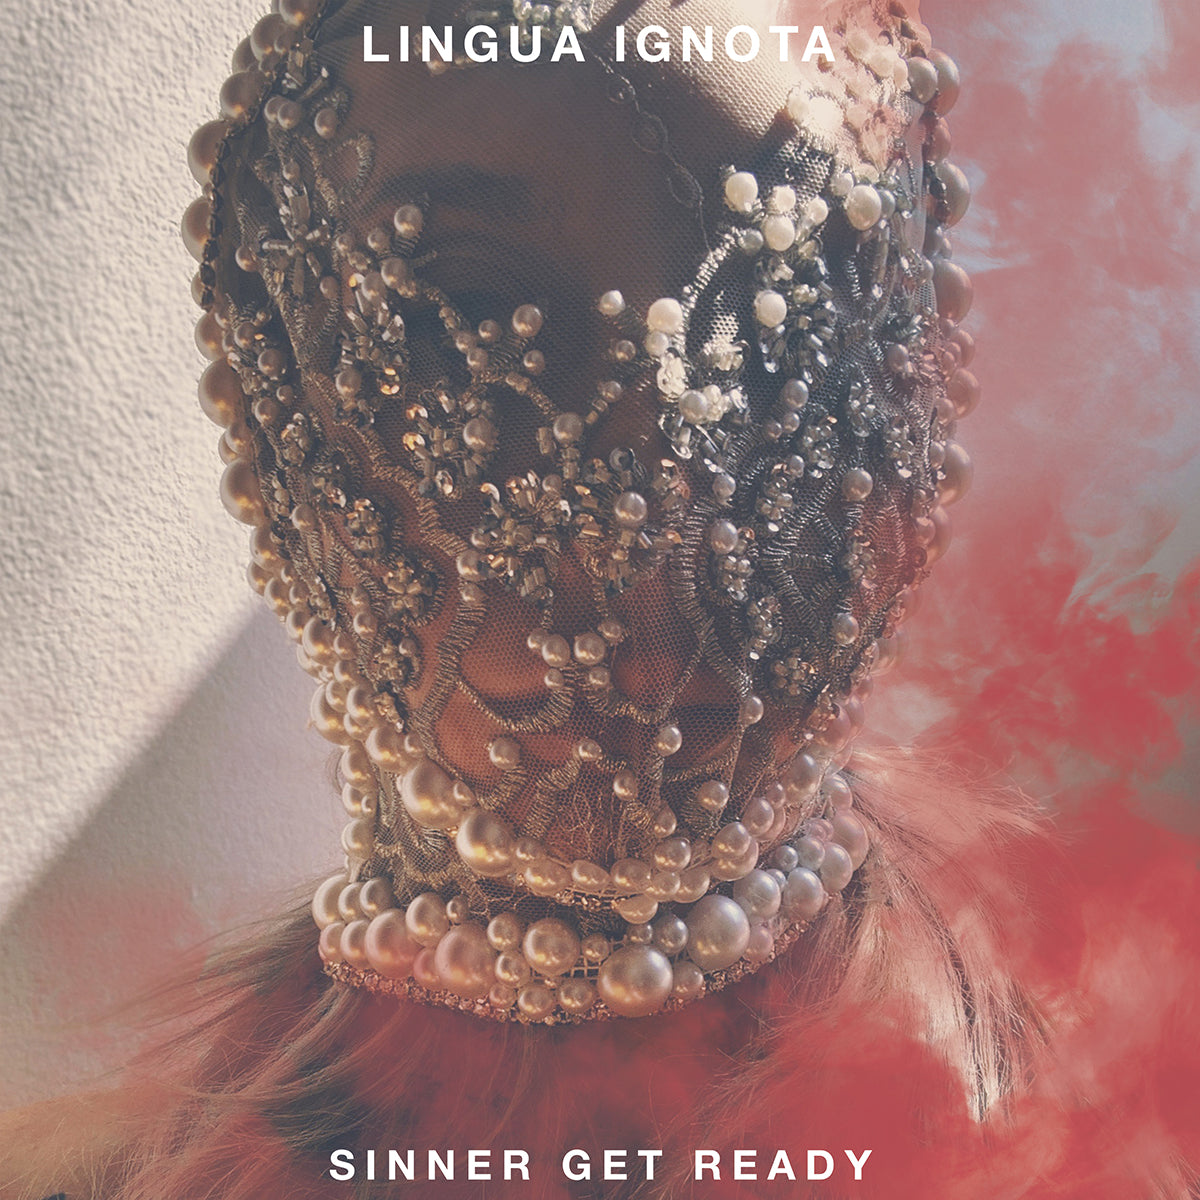 LINGUA IGNOTA "Sinner Get Ready" CD